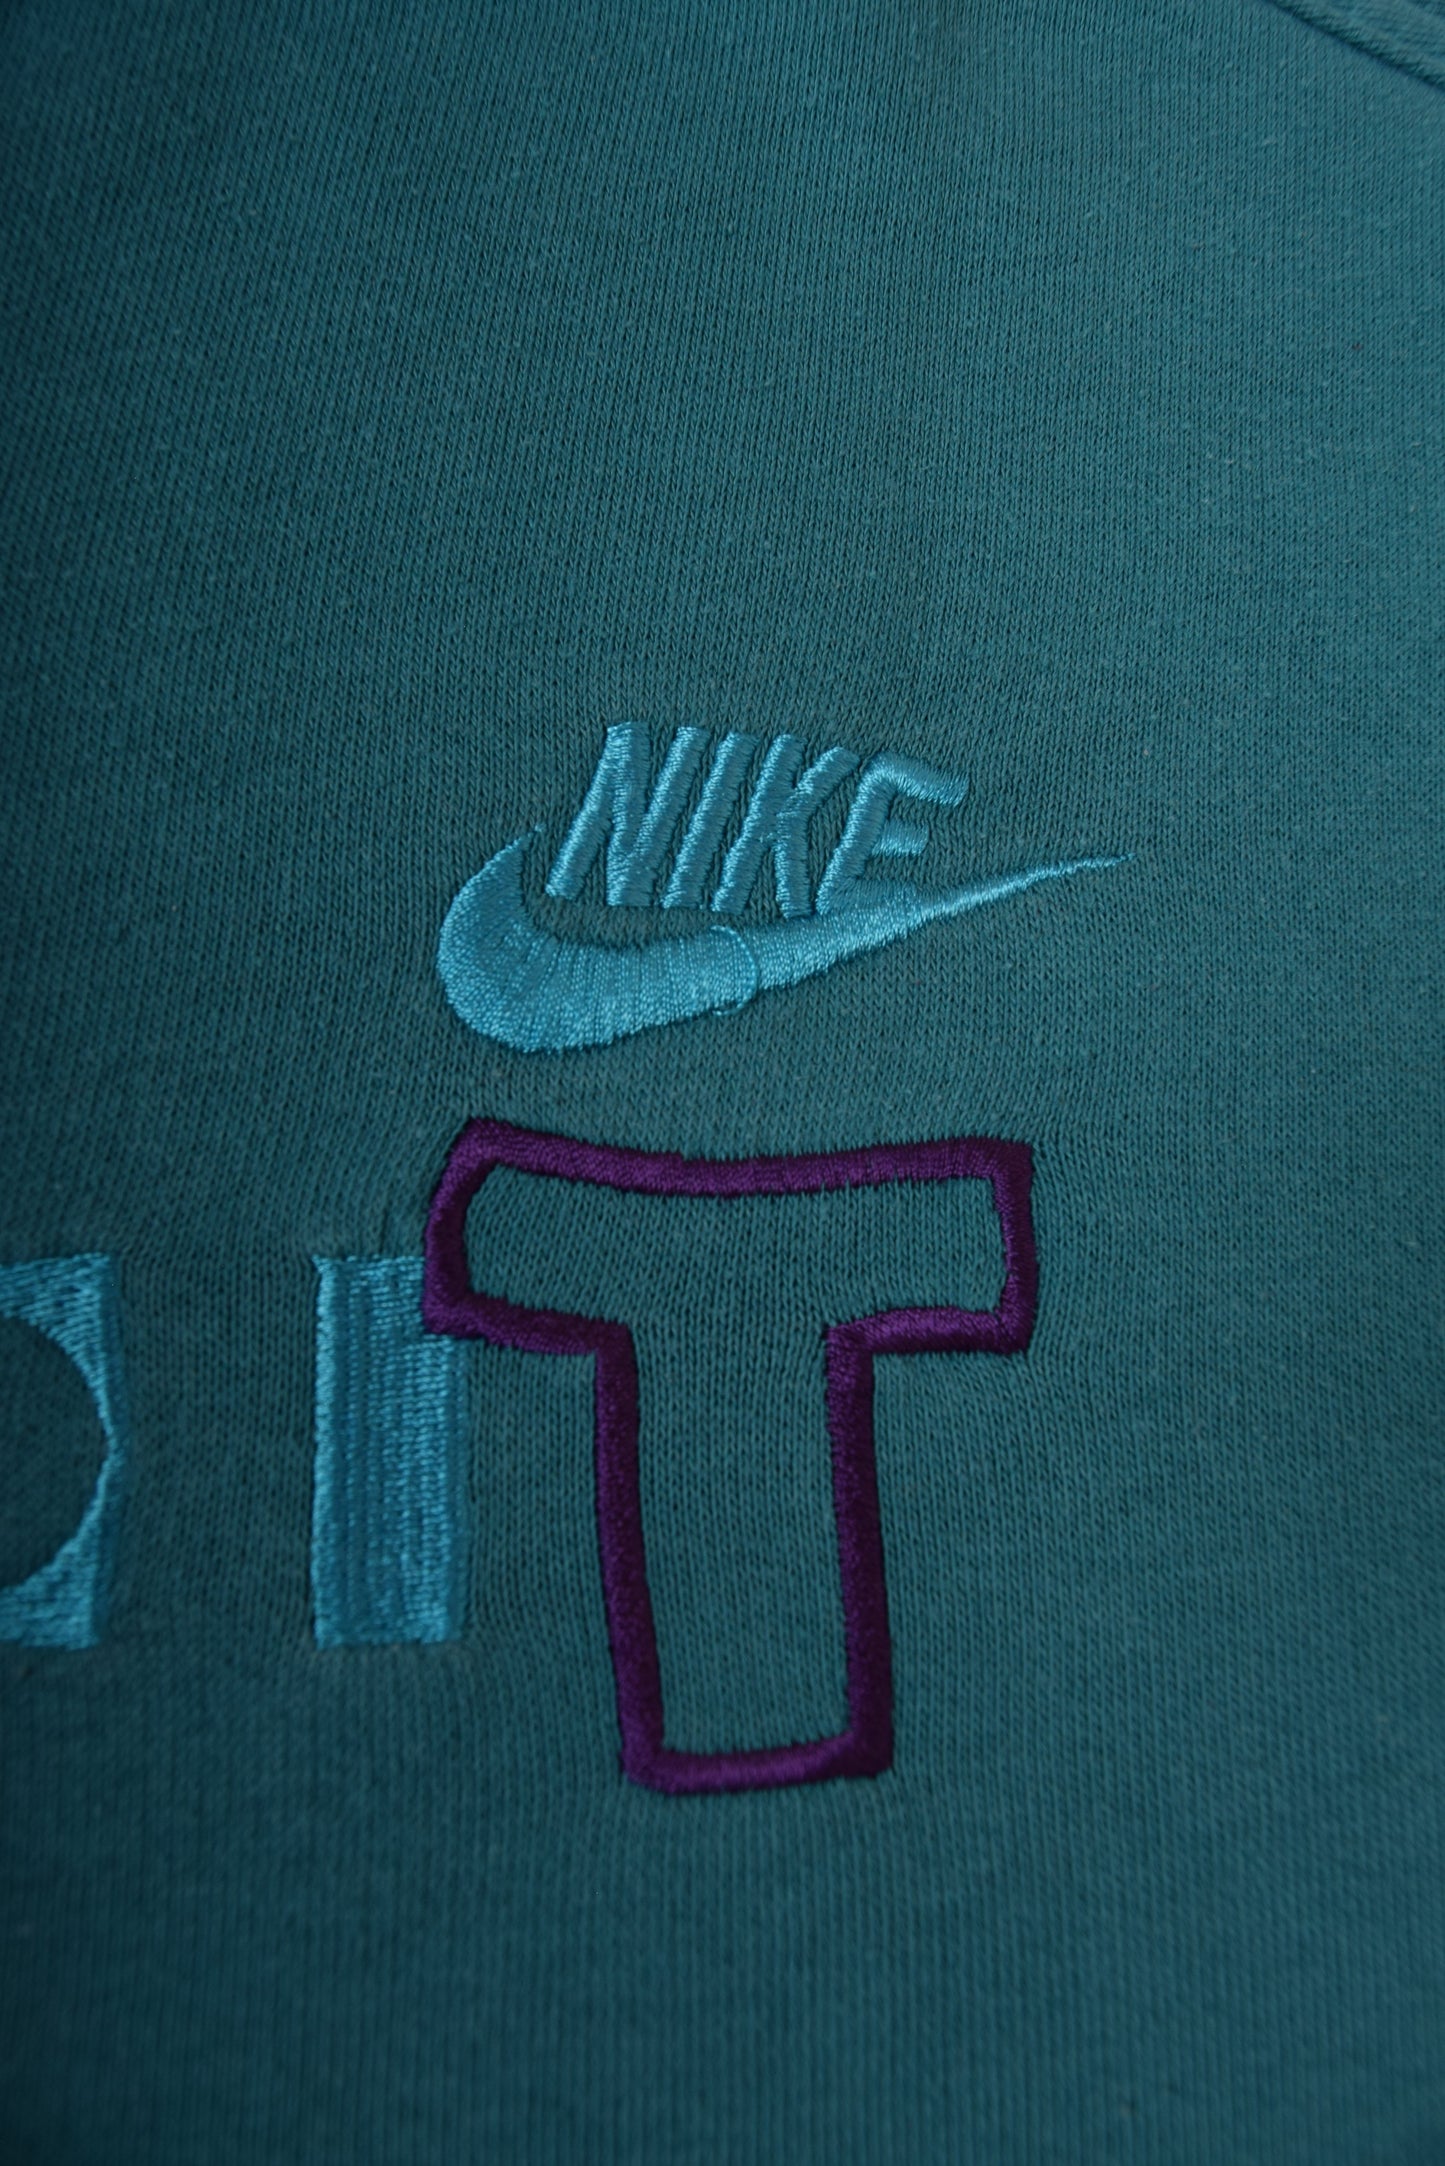 Vintage Nike Just Do It 90's Sweatshirt / Crew Neck Green Size M Green